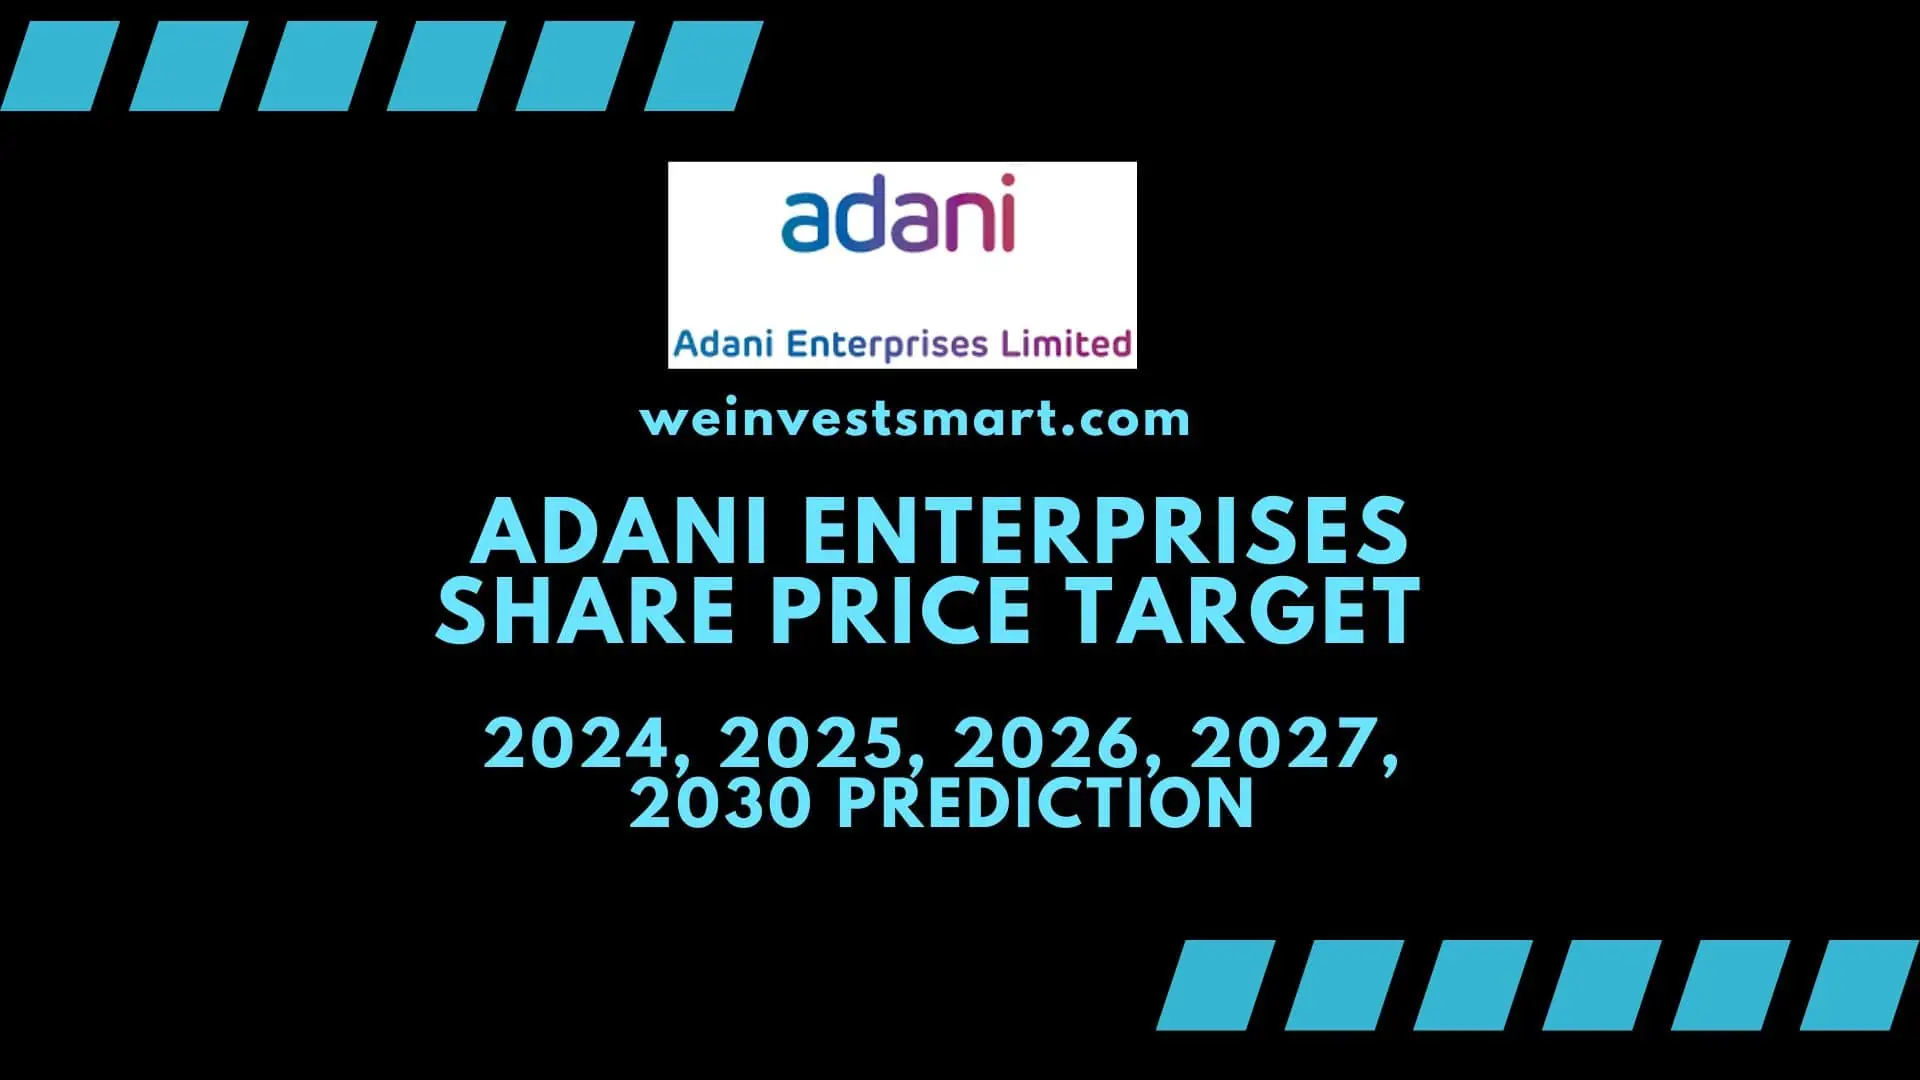 Adani Enterprises share price target 2024, 2025, 2026, 2027, 2030 prediction